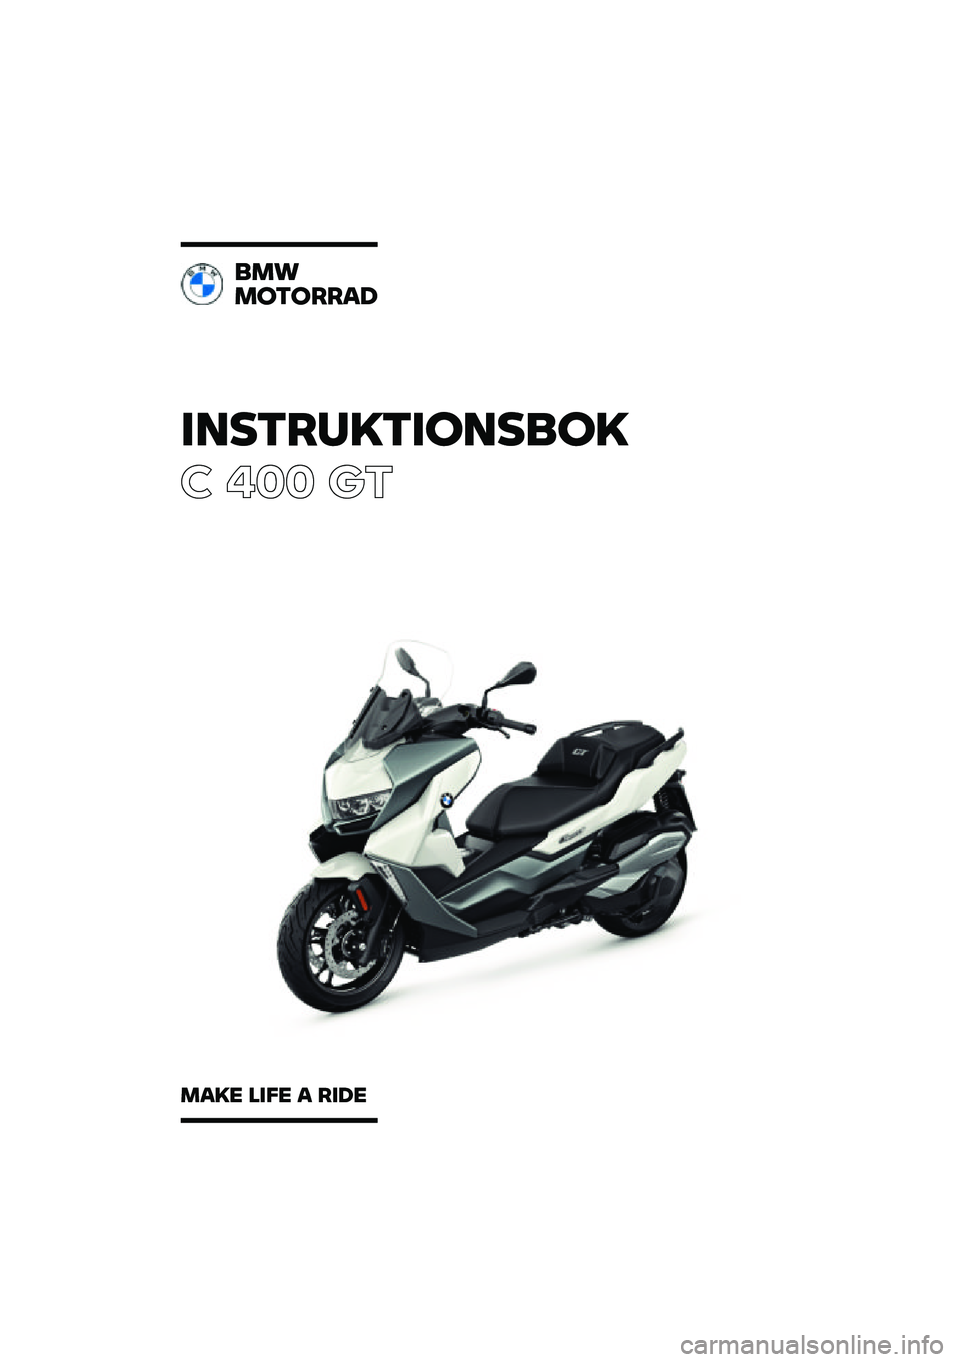 BMW MOTORRAD C 400 GT 2021  Instruktionsbok (in Swedish) �������\b���	���
�	�\b
� ��� ��\b
�
��\f
��	��	���
�
��
�\b� ���� �
 ���� 